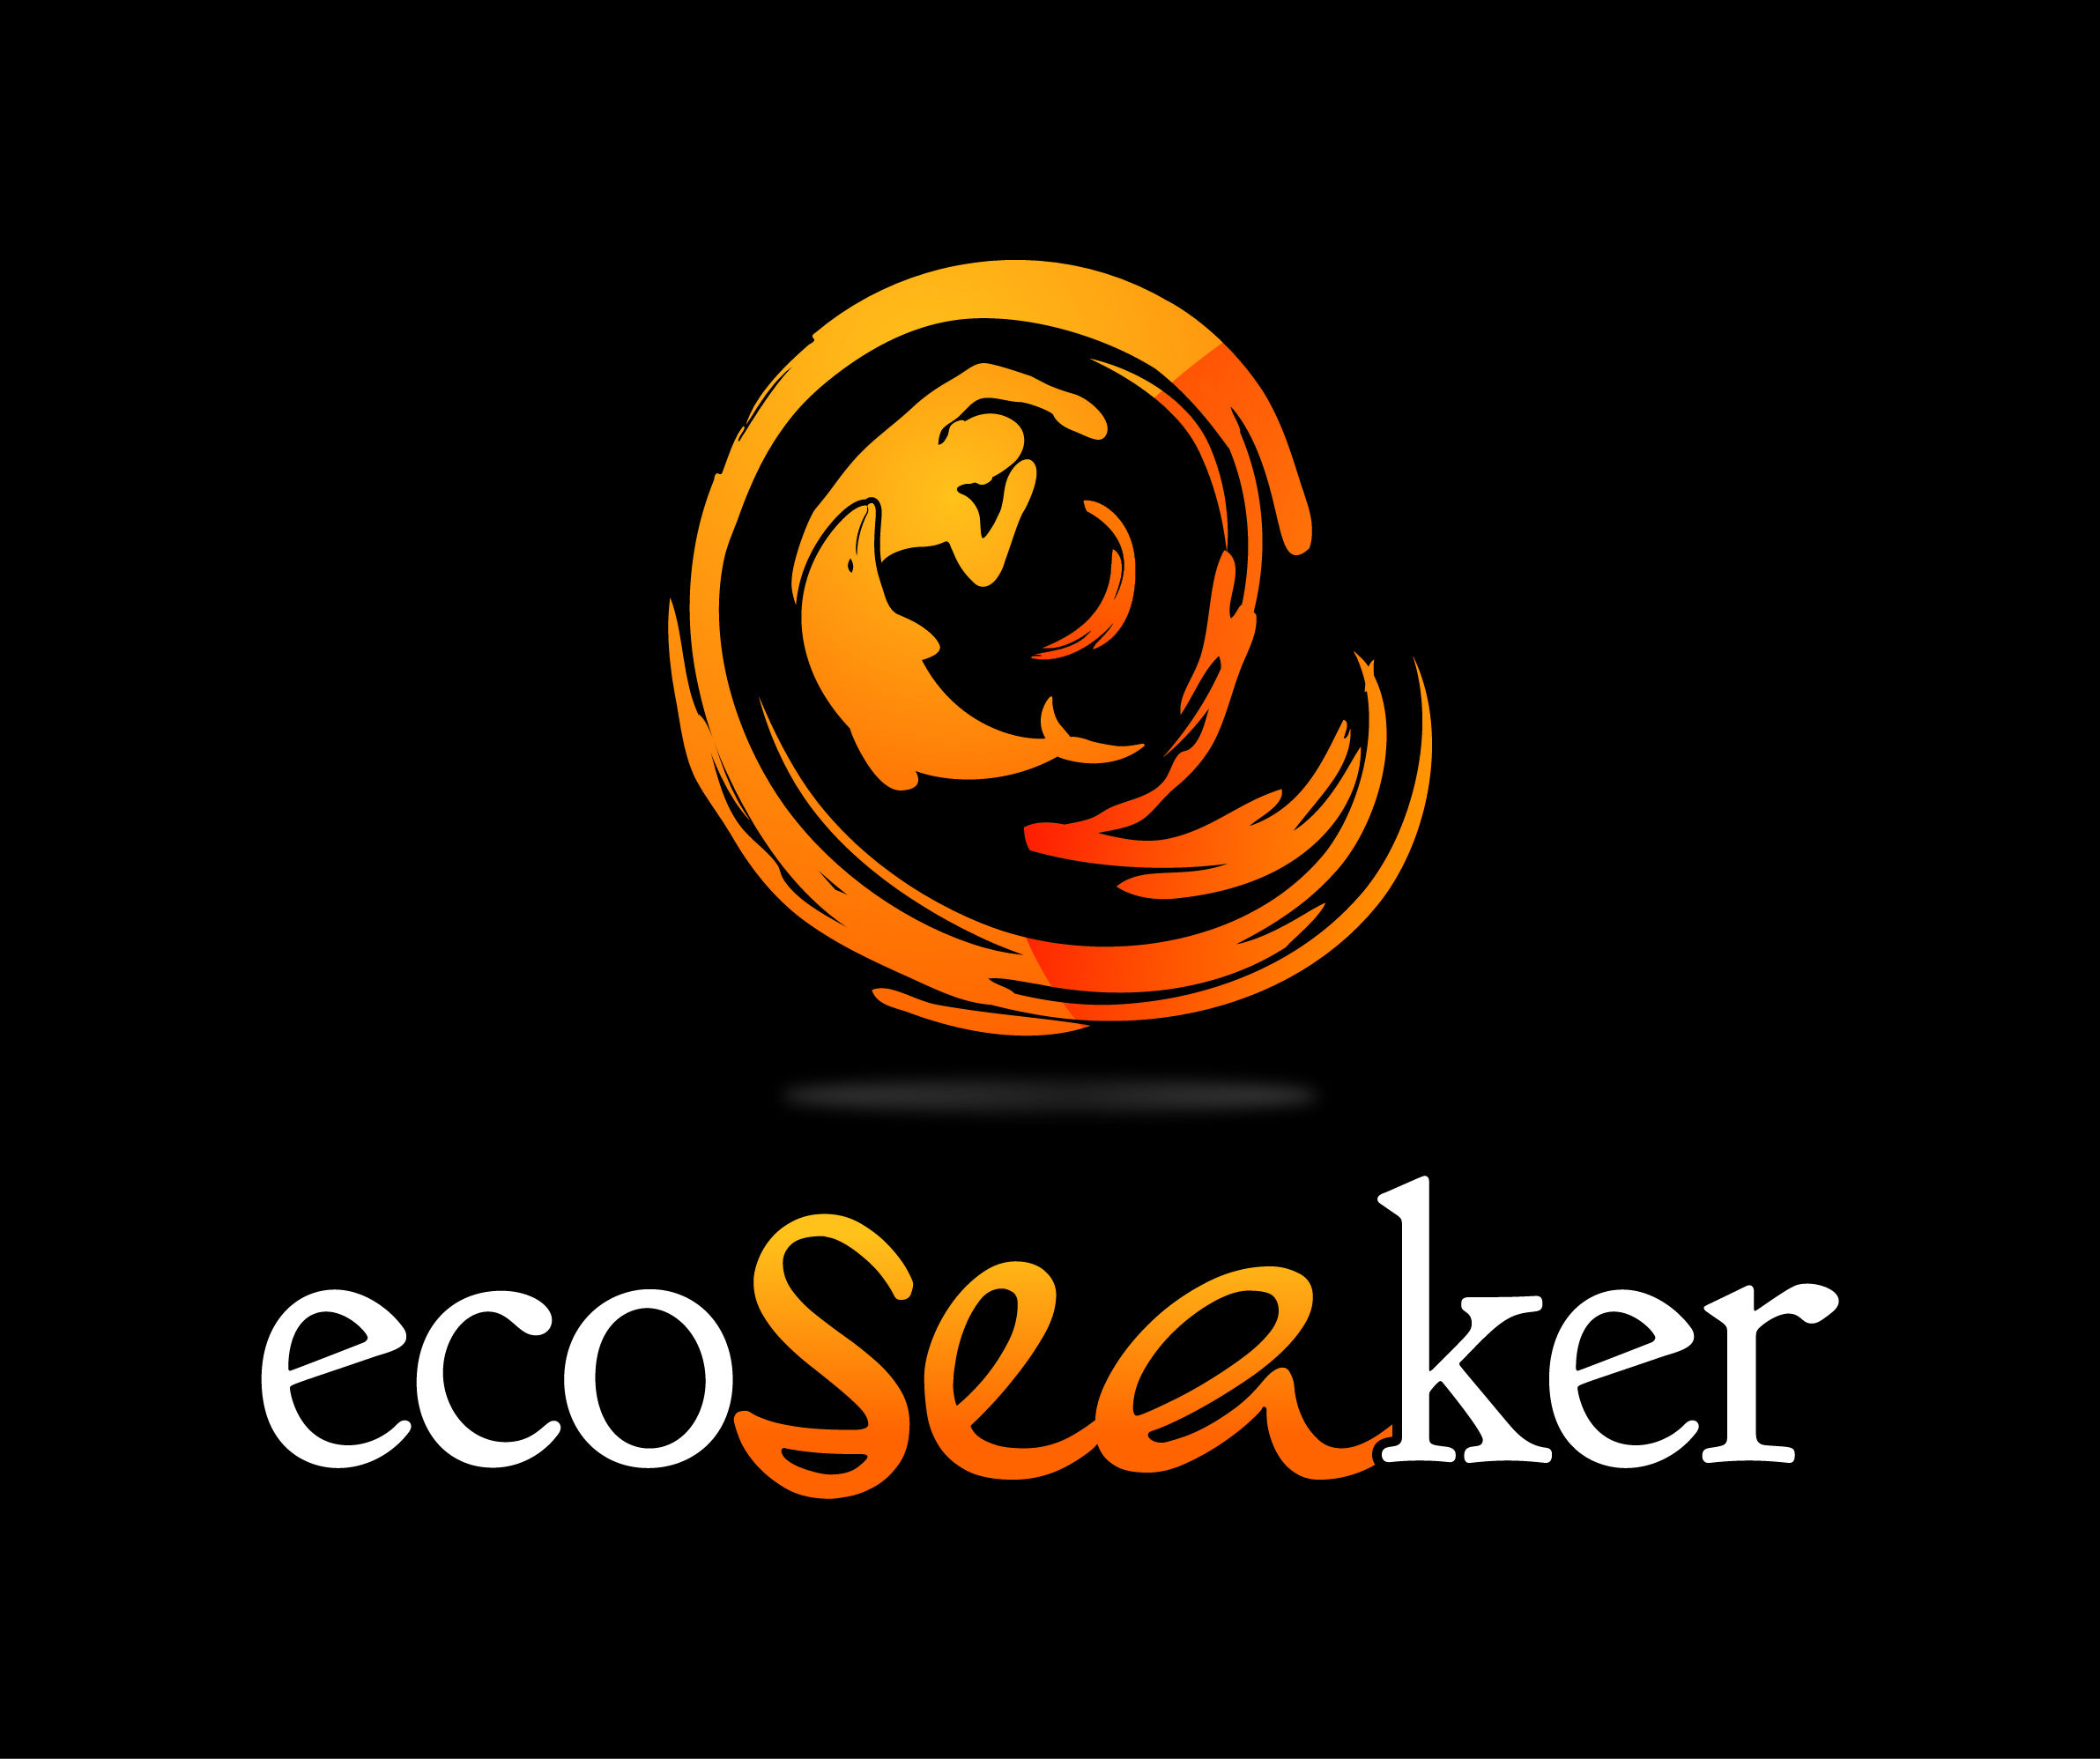 Ecoseaker Ltd